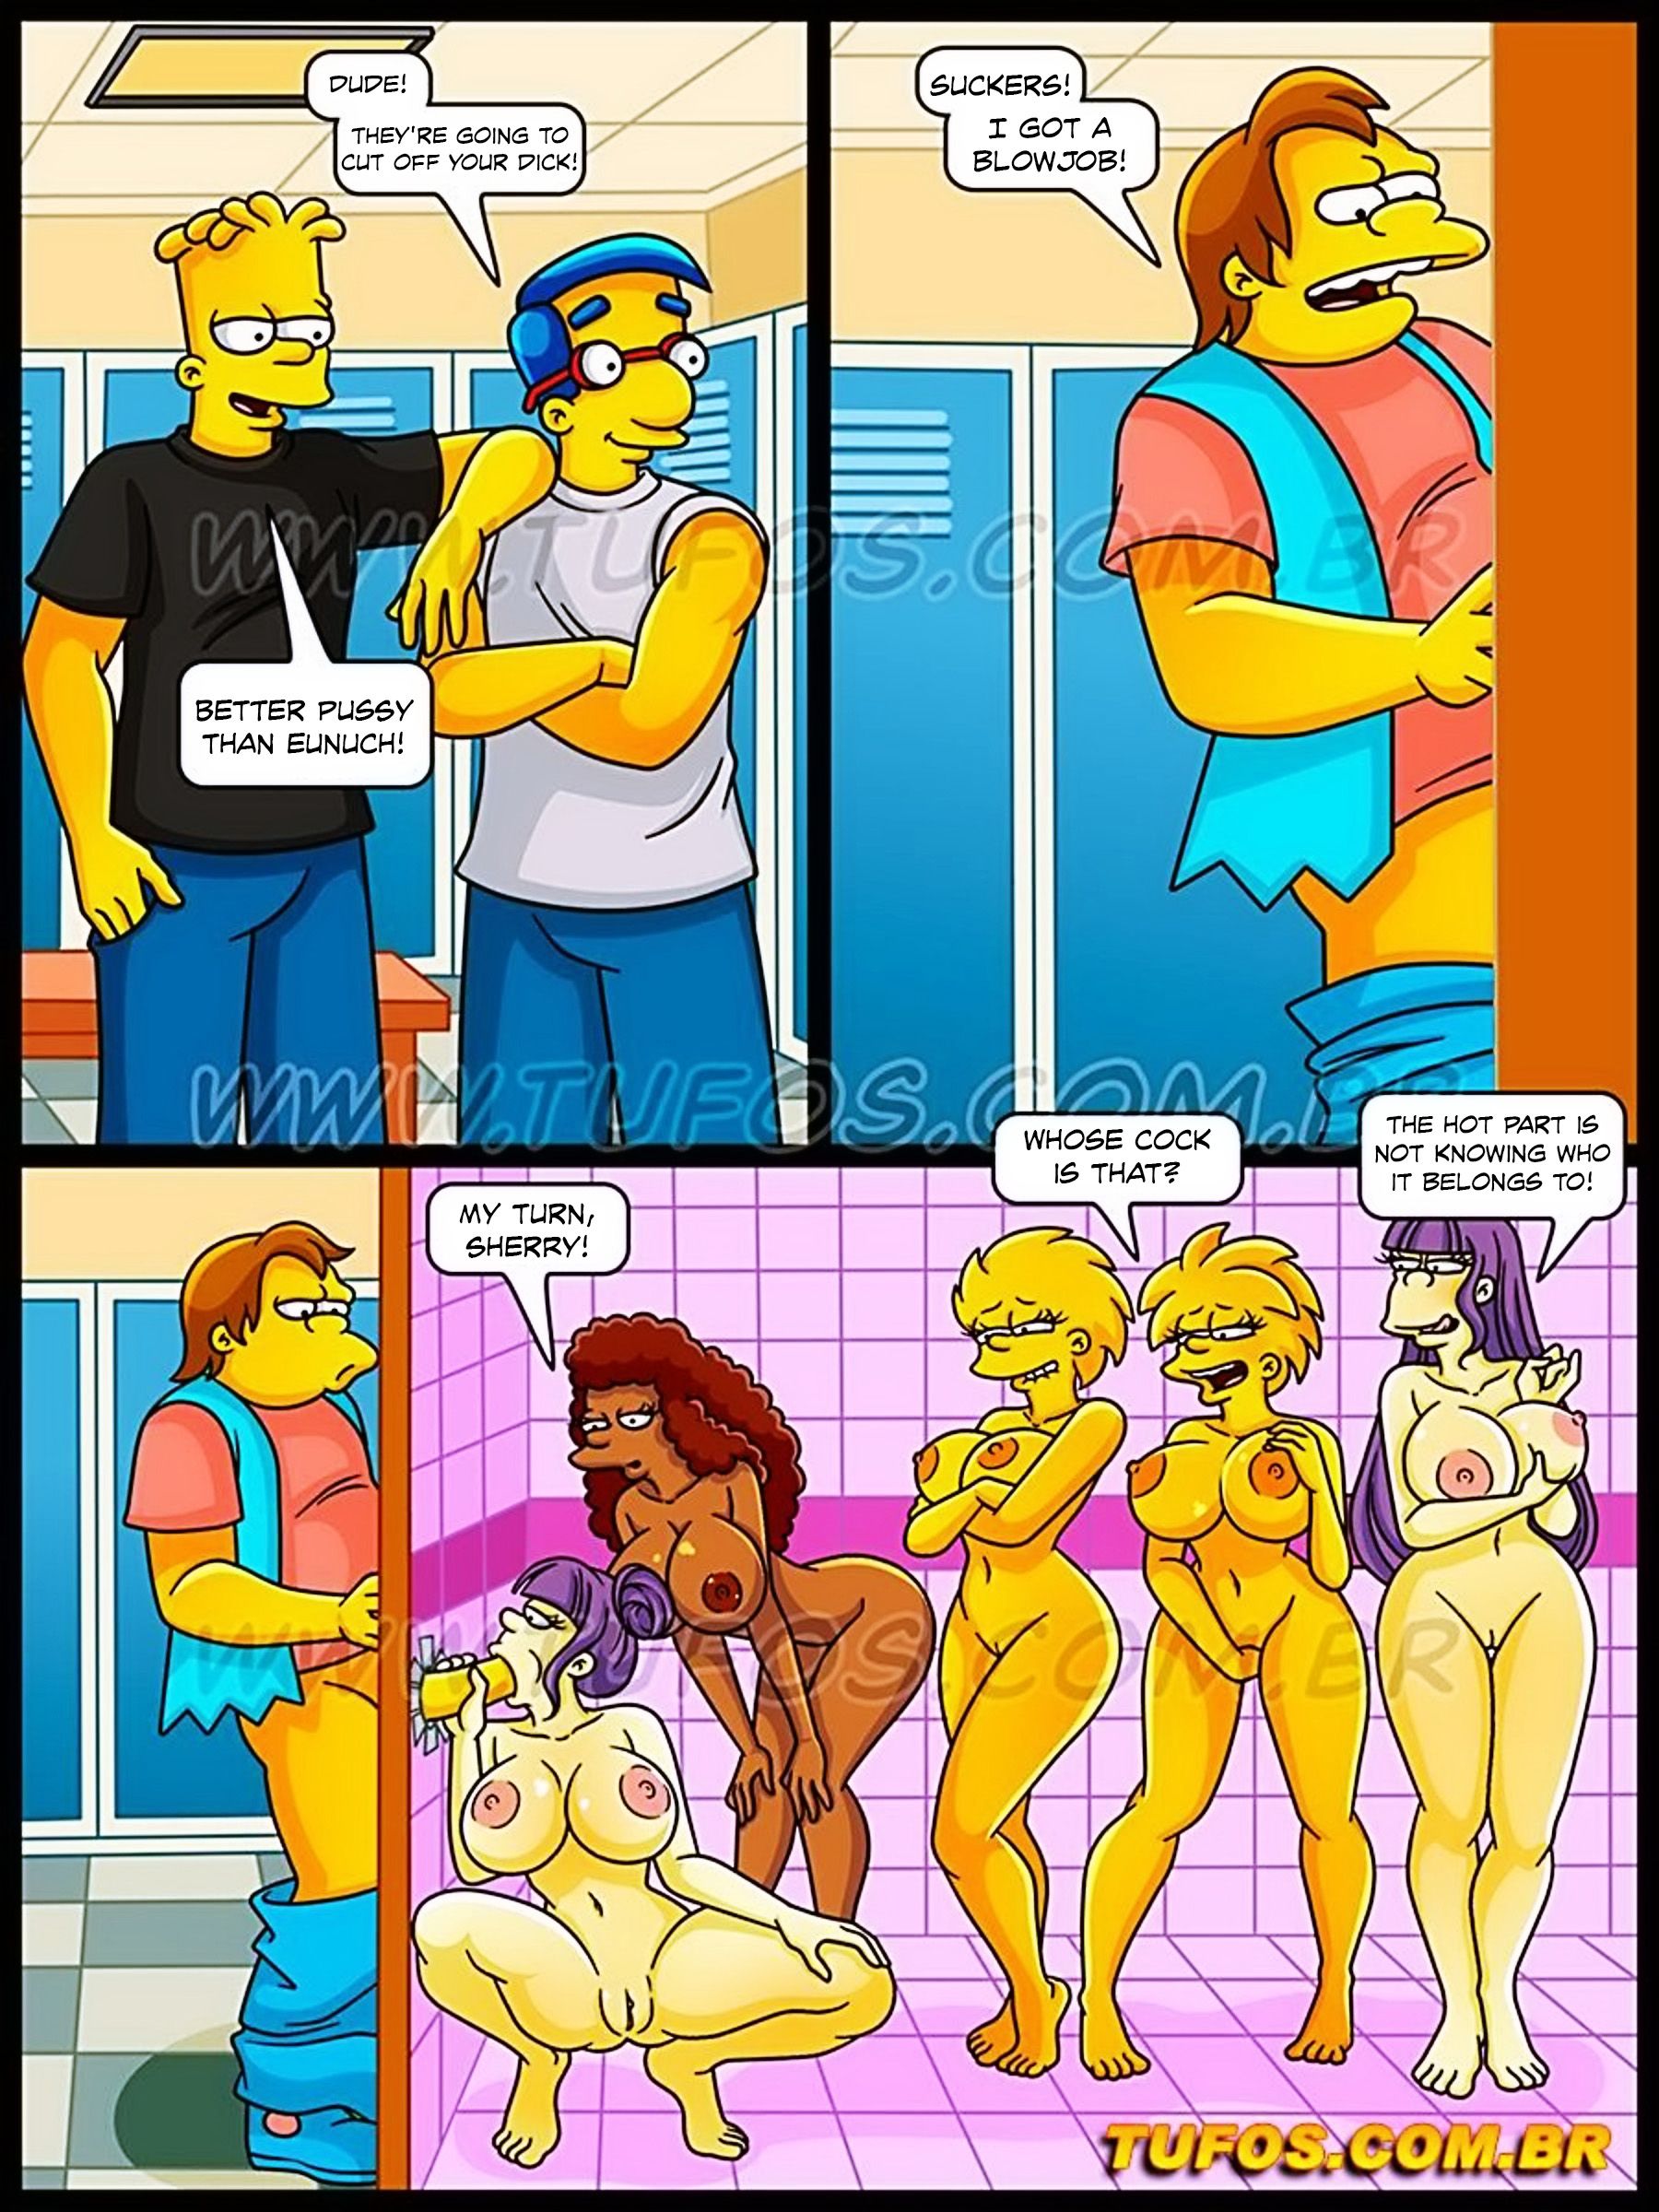 https://gedecomix.com/static/WP-manga/data/manga_6676c4a22e9b0/960abf364edfd30899faf45c0199818d/The-Simpsons-52--Women's-Locker-Room-(7).jpg